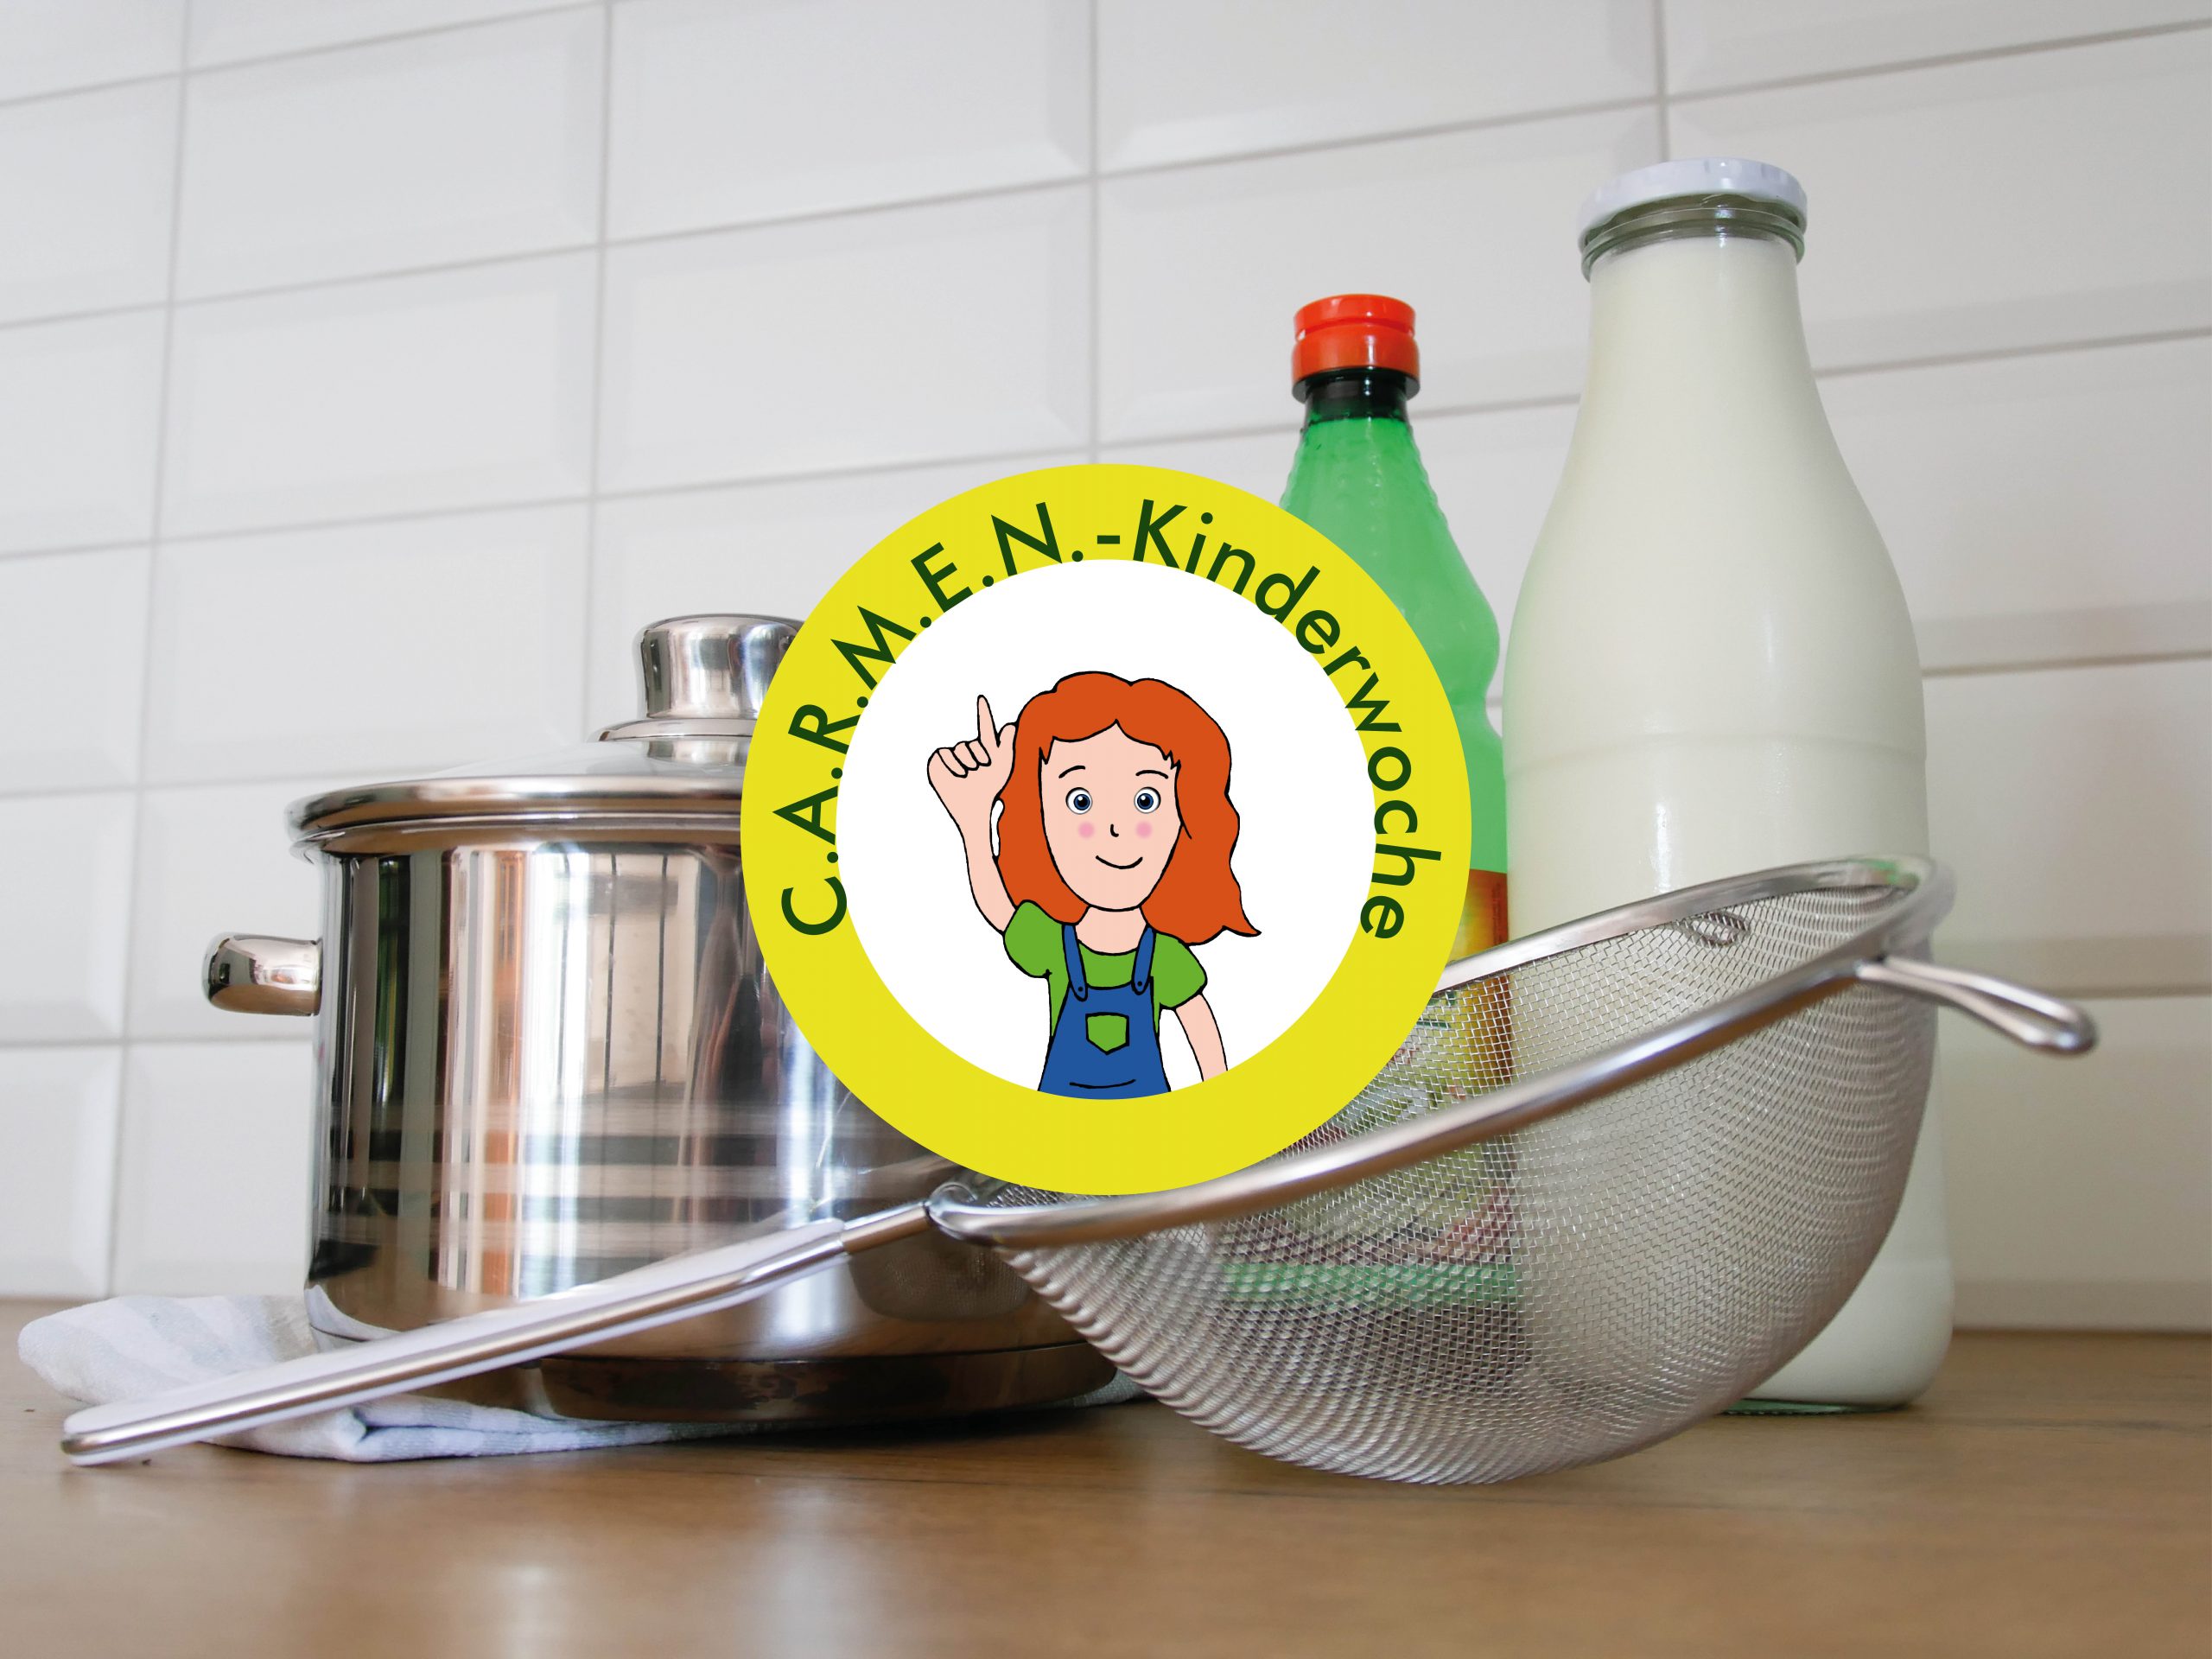 C.A.R.M.E.N.-Kinderwoche: DIY “Kunststoff aus Milch”